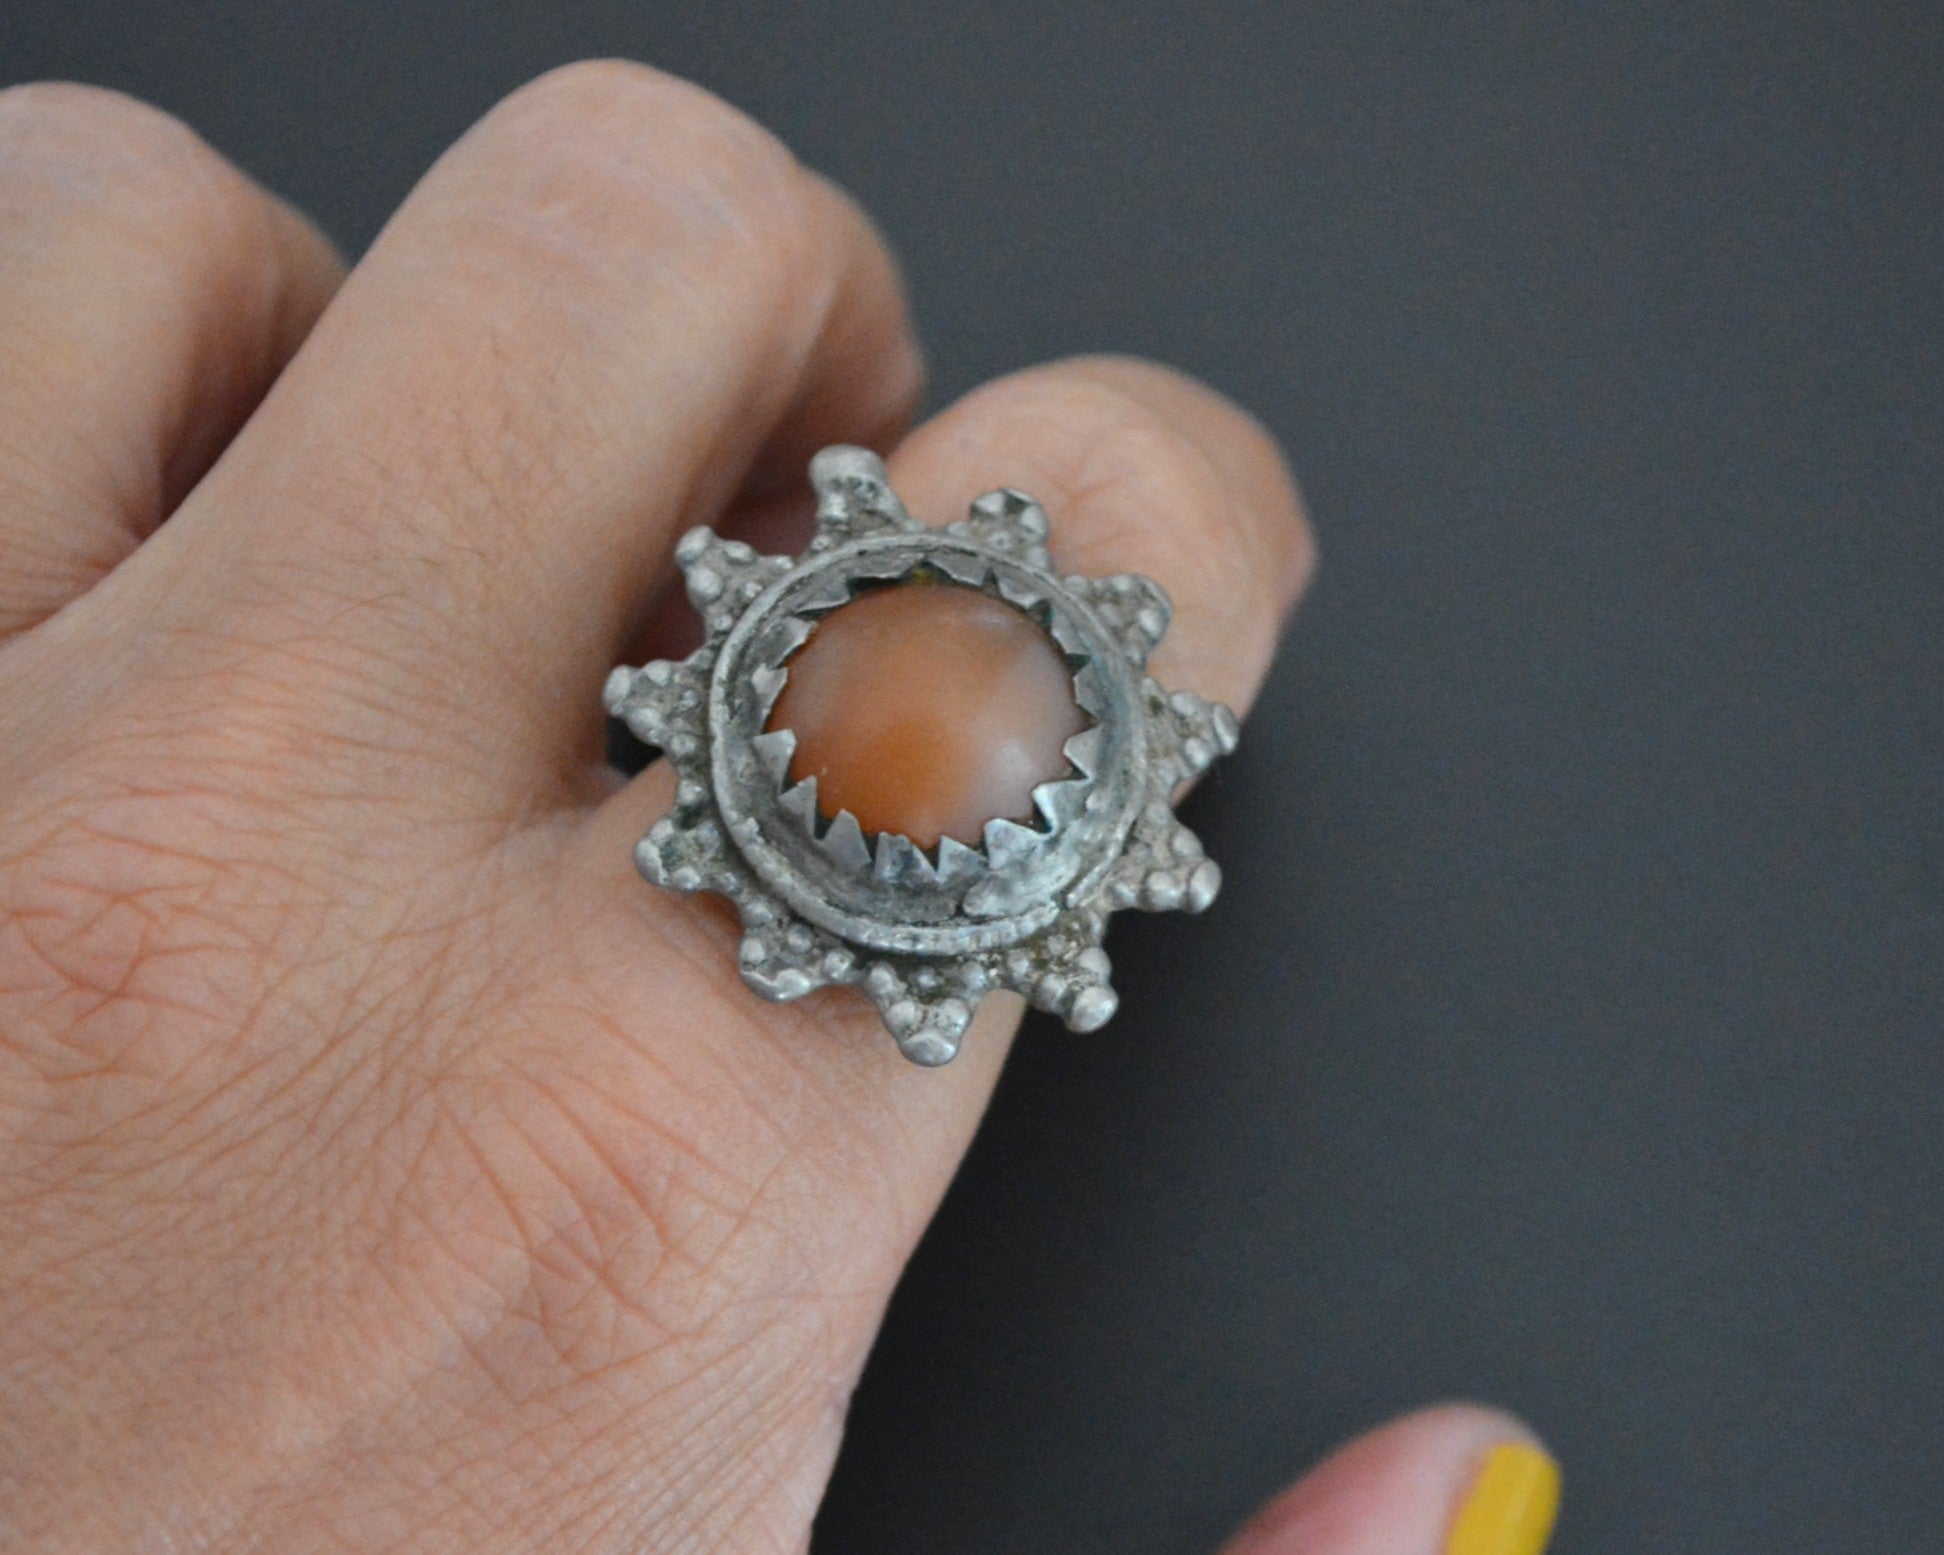 Vintage Afghani Agate Ring - Size 7.5